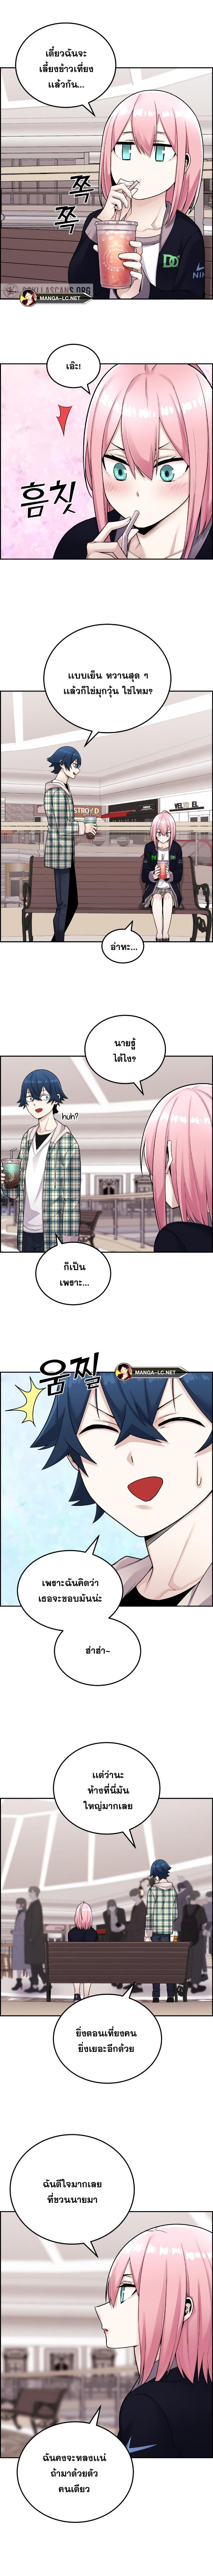 Webtoon Character Na Kang Lim ร ยธโ€ขร ยธยญร ยธโขร ยธโ€”ร ยธยตร ยนห 16 (6)